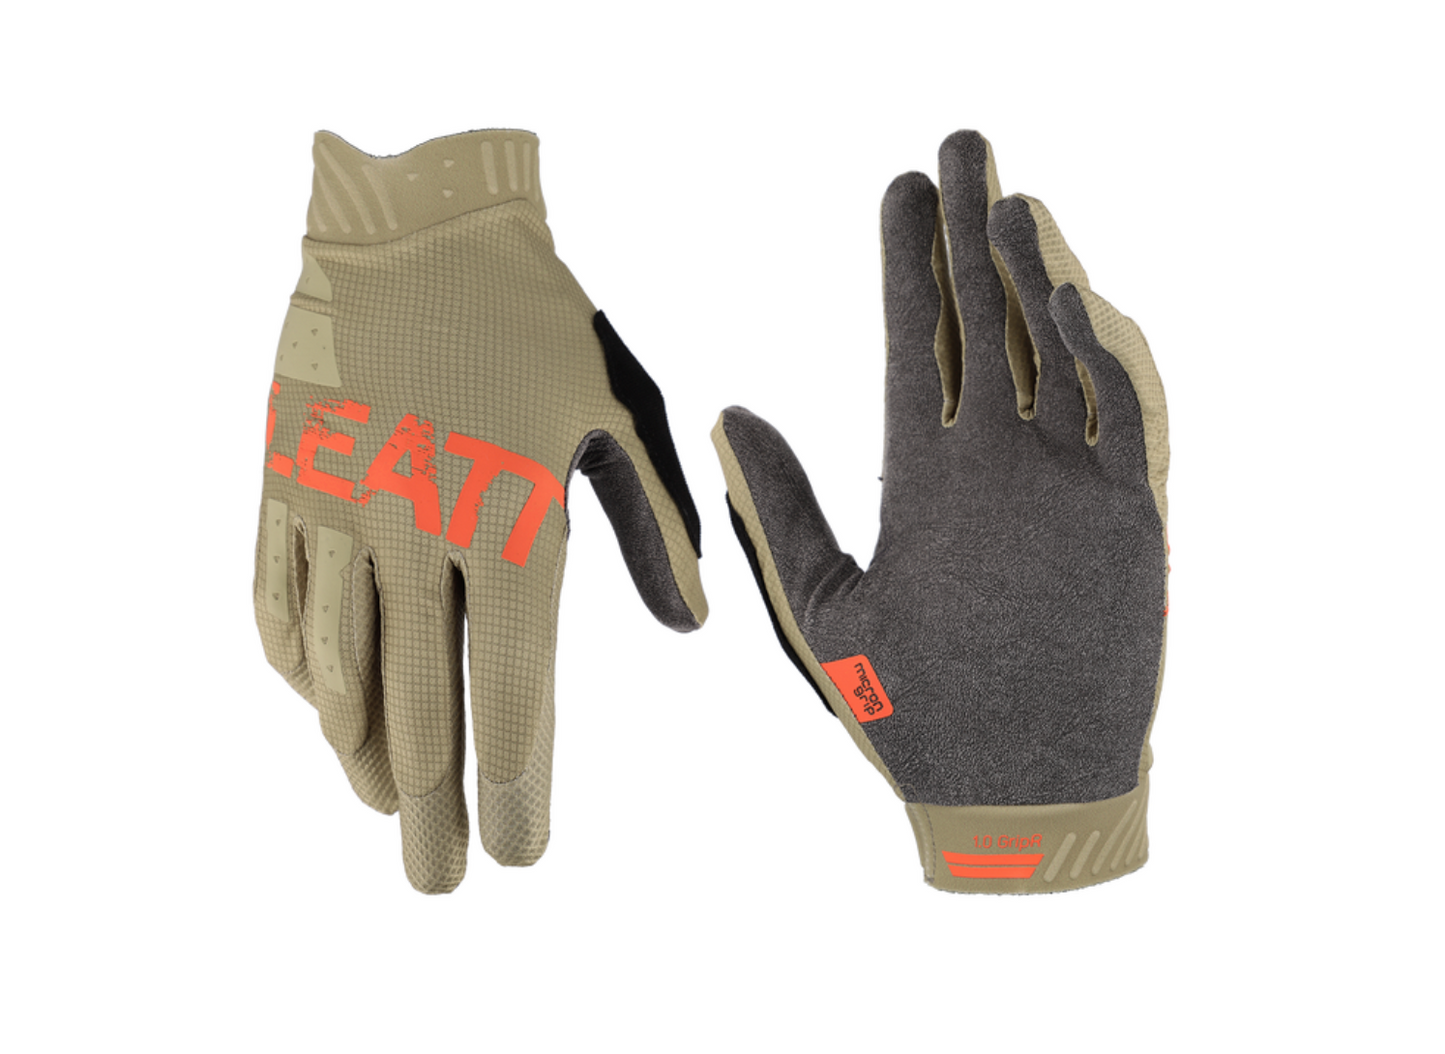 Leatt Protection Glove MTB 1.0 Gripr